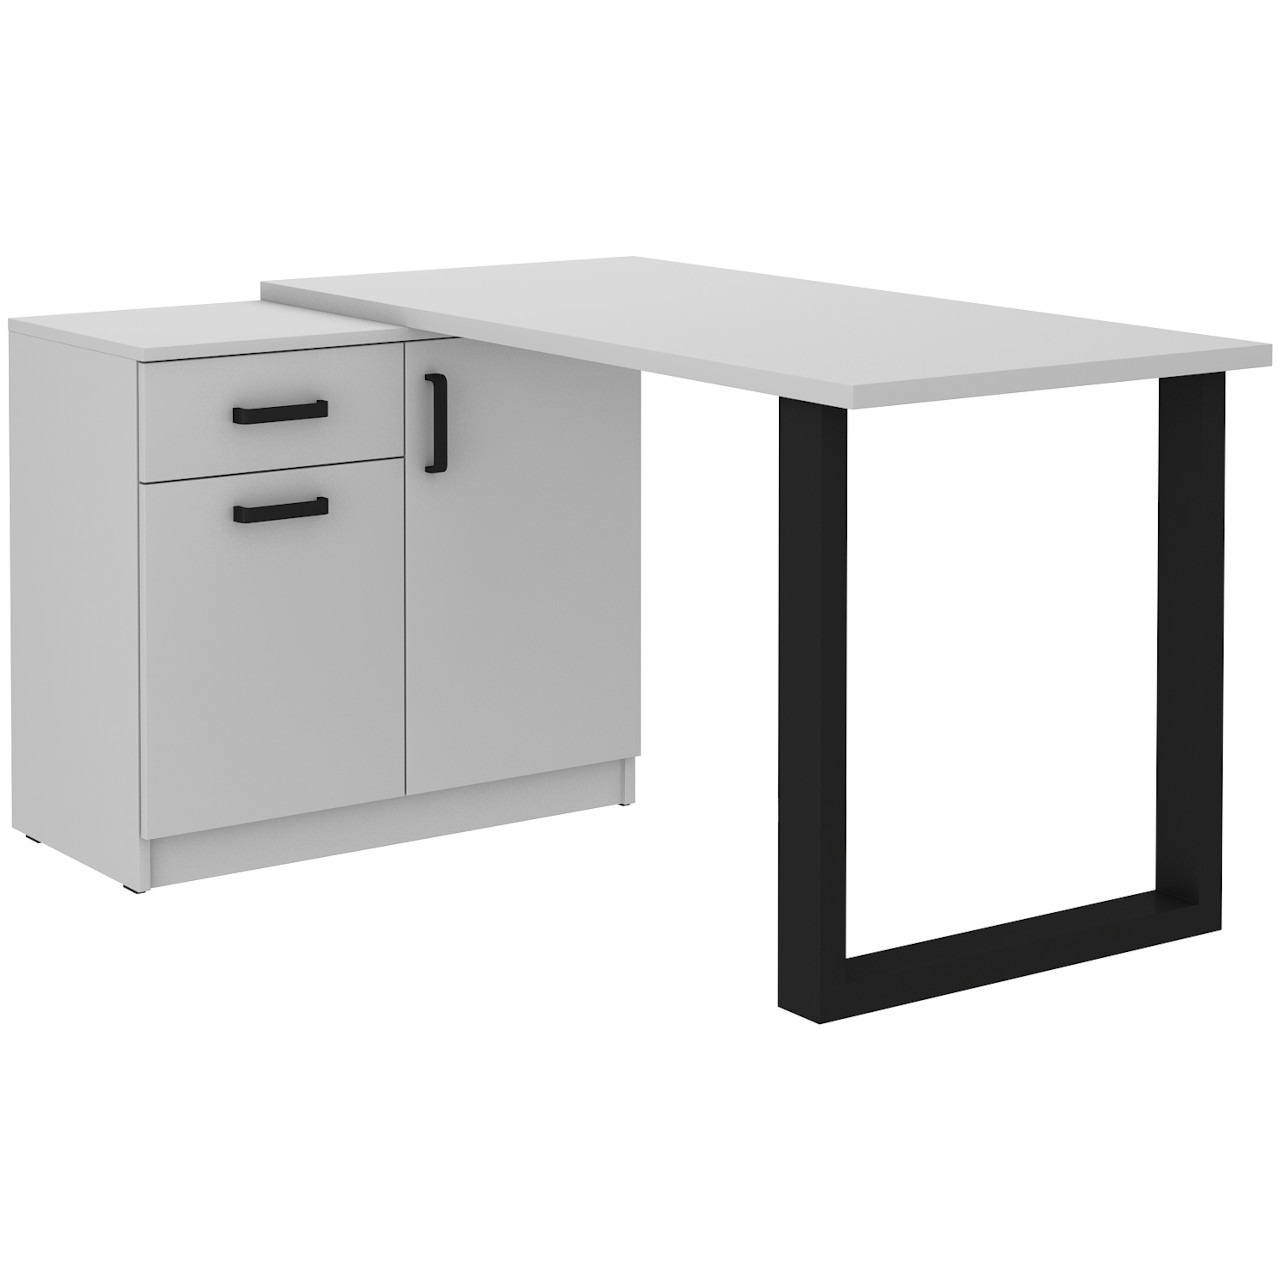 Storage Cabinet with desk MALTA MT15 light grey